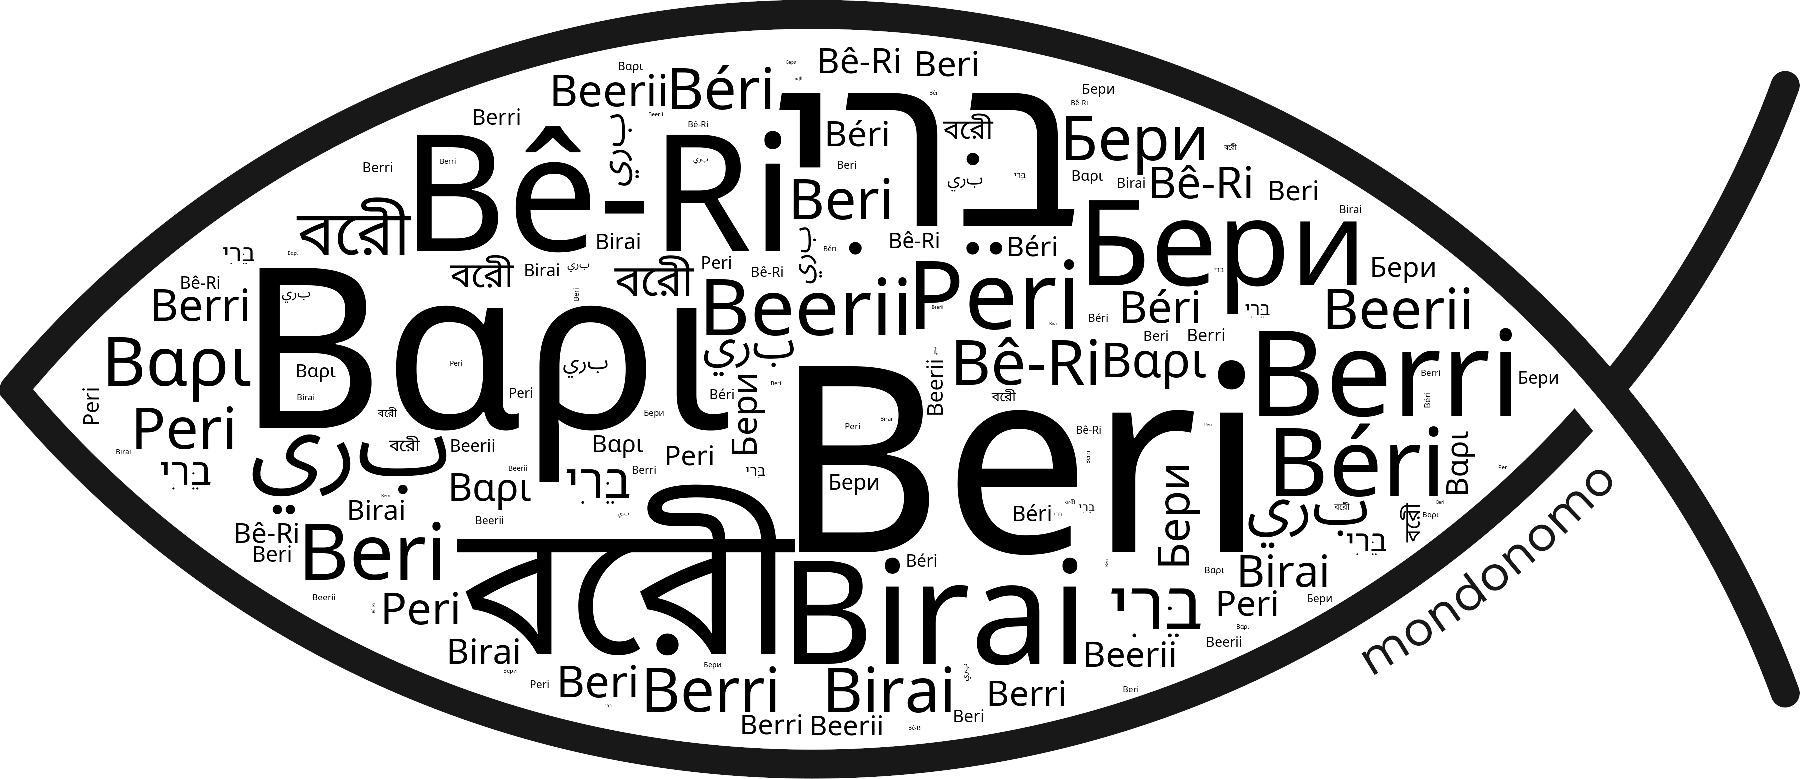 Name Beri in the world's Bibles